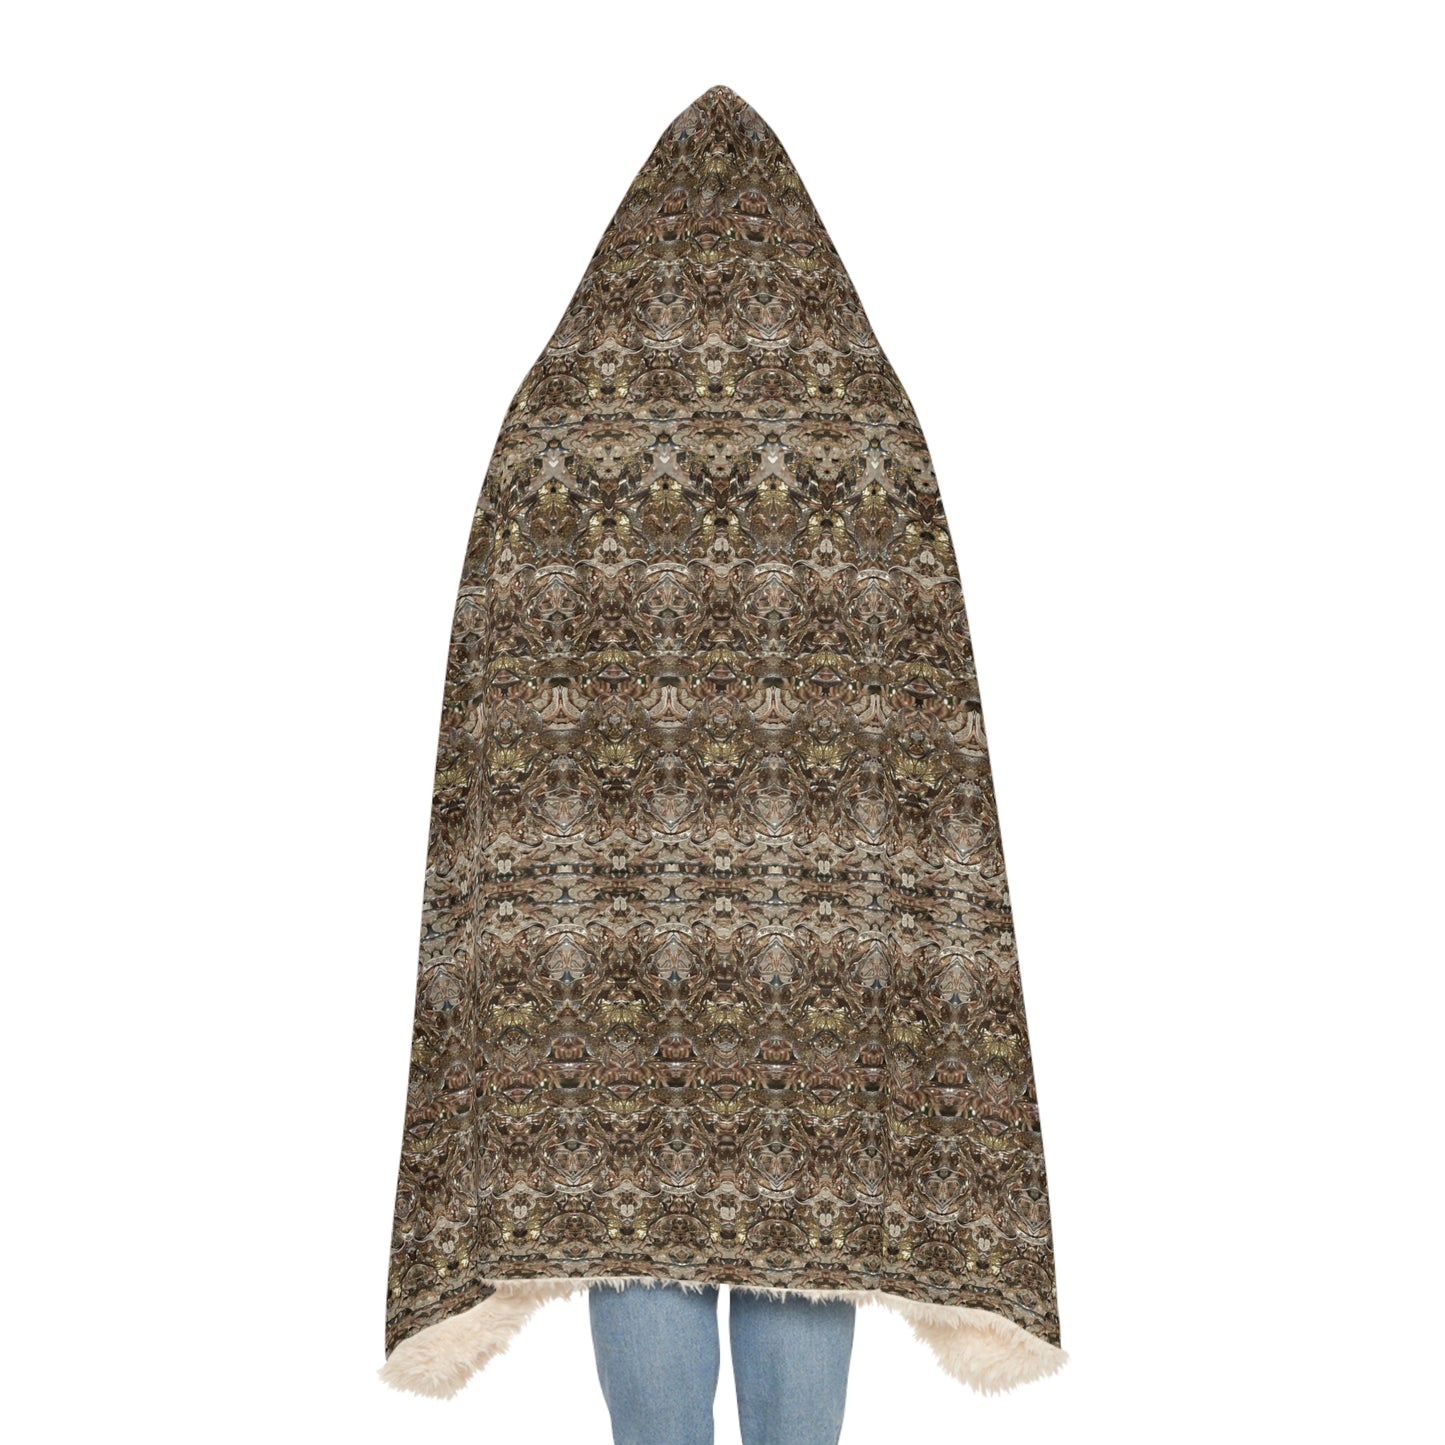 Hooded Snuggle Blanket (Samhain Dream Thaw 13/15 (Tredecim ex quindecim) RJSTHw2023 RJS